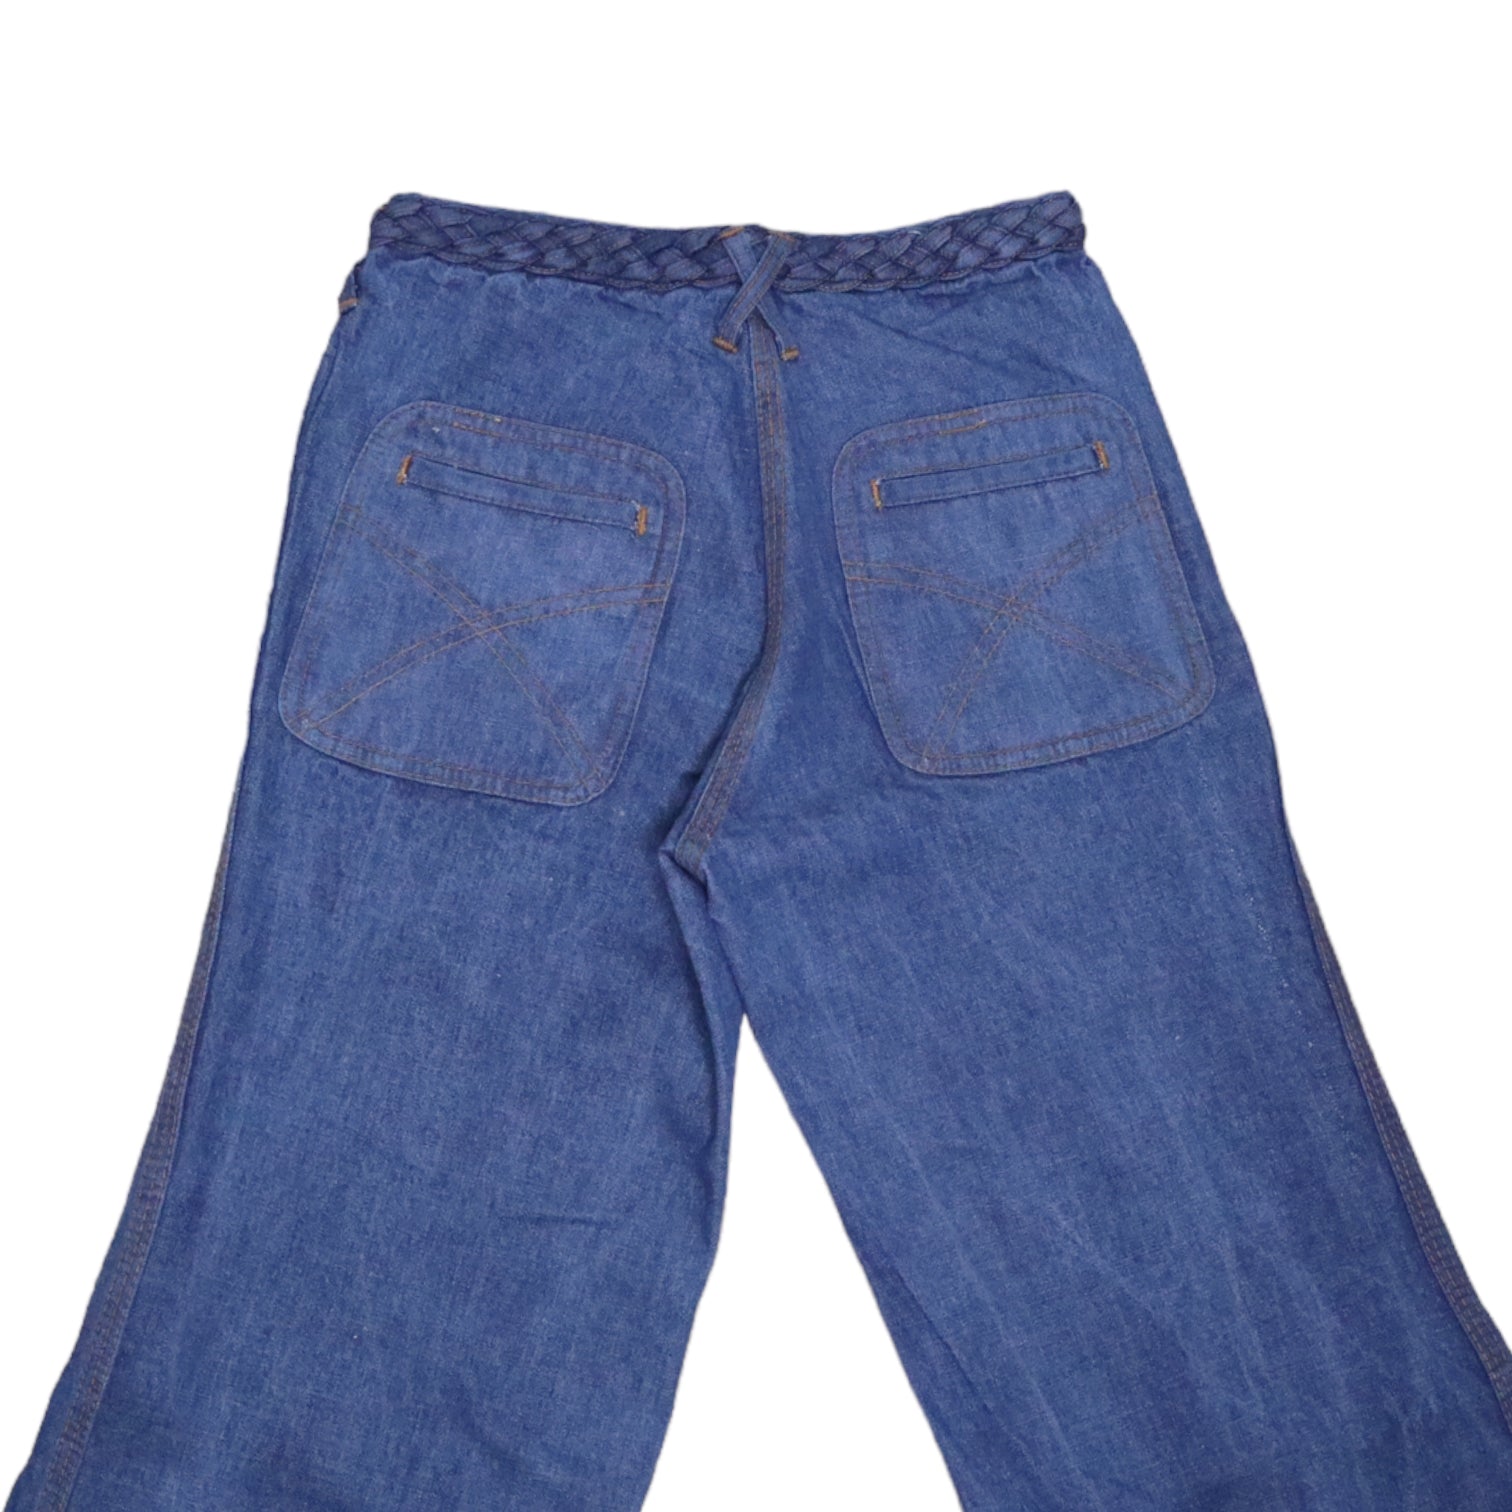 70s Wide Leg Jeans (XS)